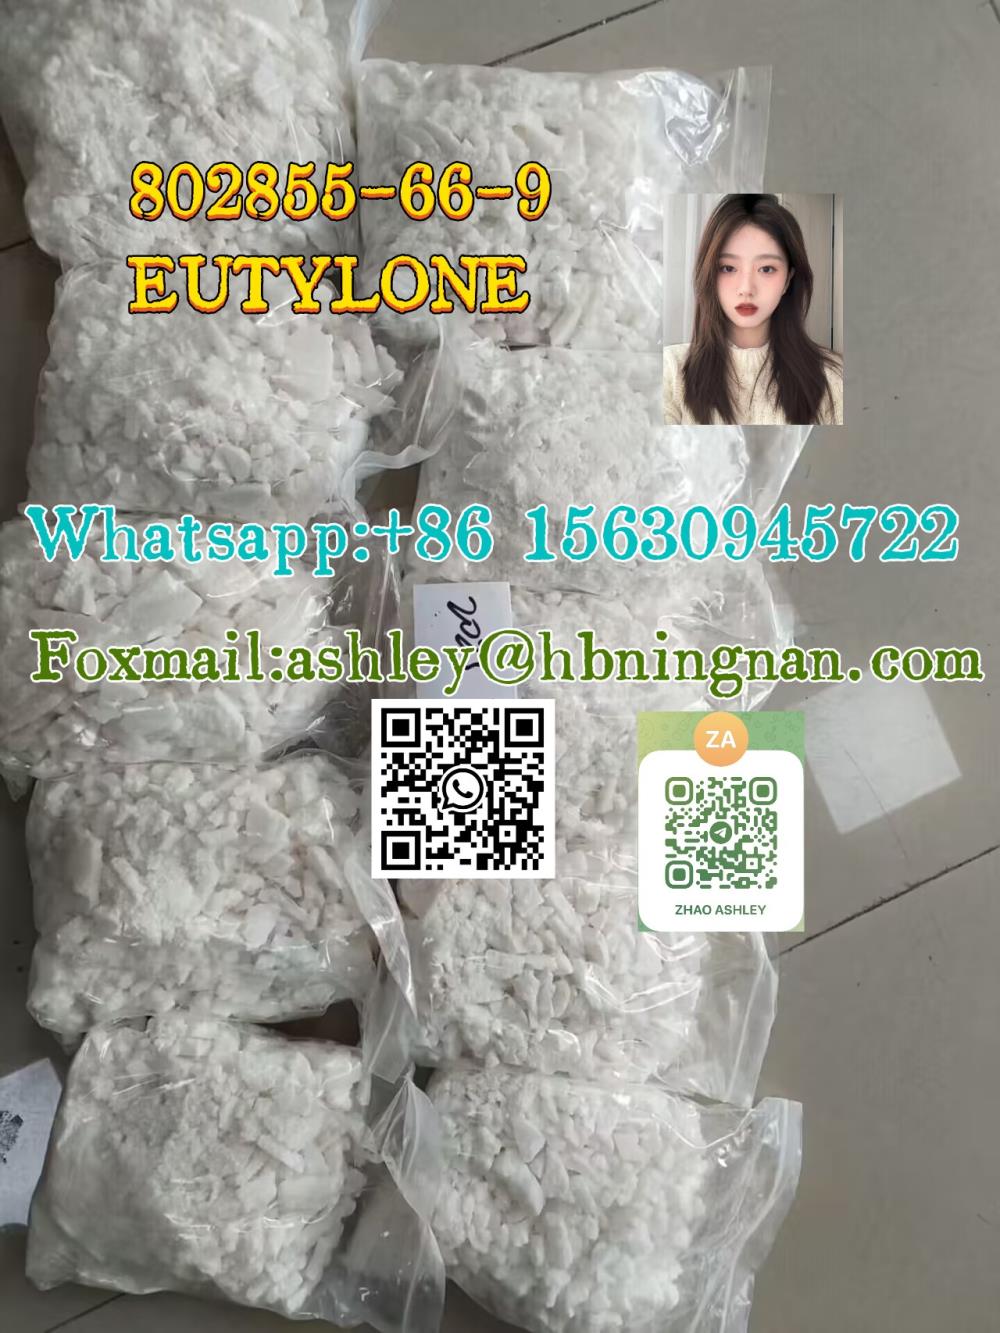 cas  802855-66-9  EUTYLONE High quality Organic Chemicals,802855-66-9  EUTYLONE,ningnan ,Materials Handling/Balers